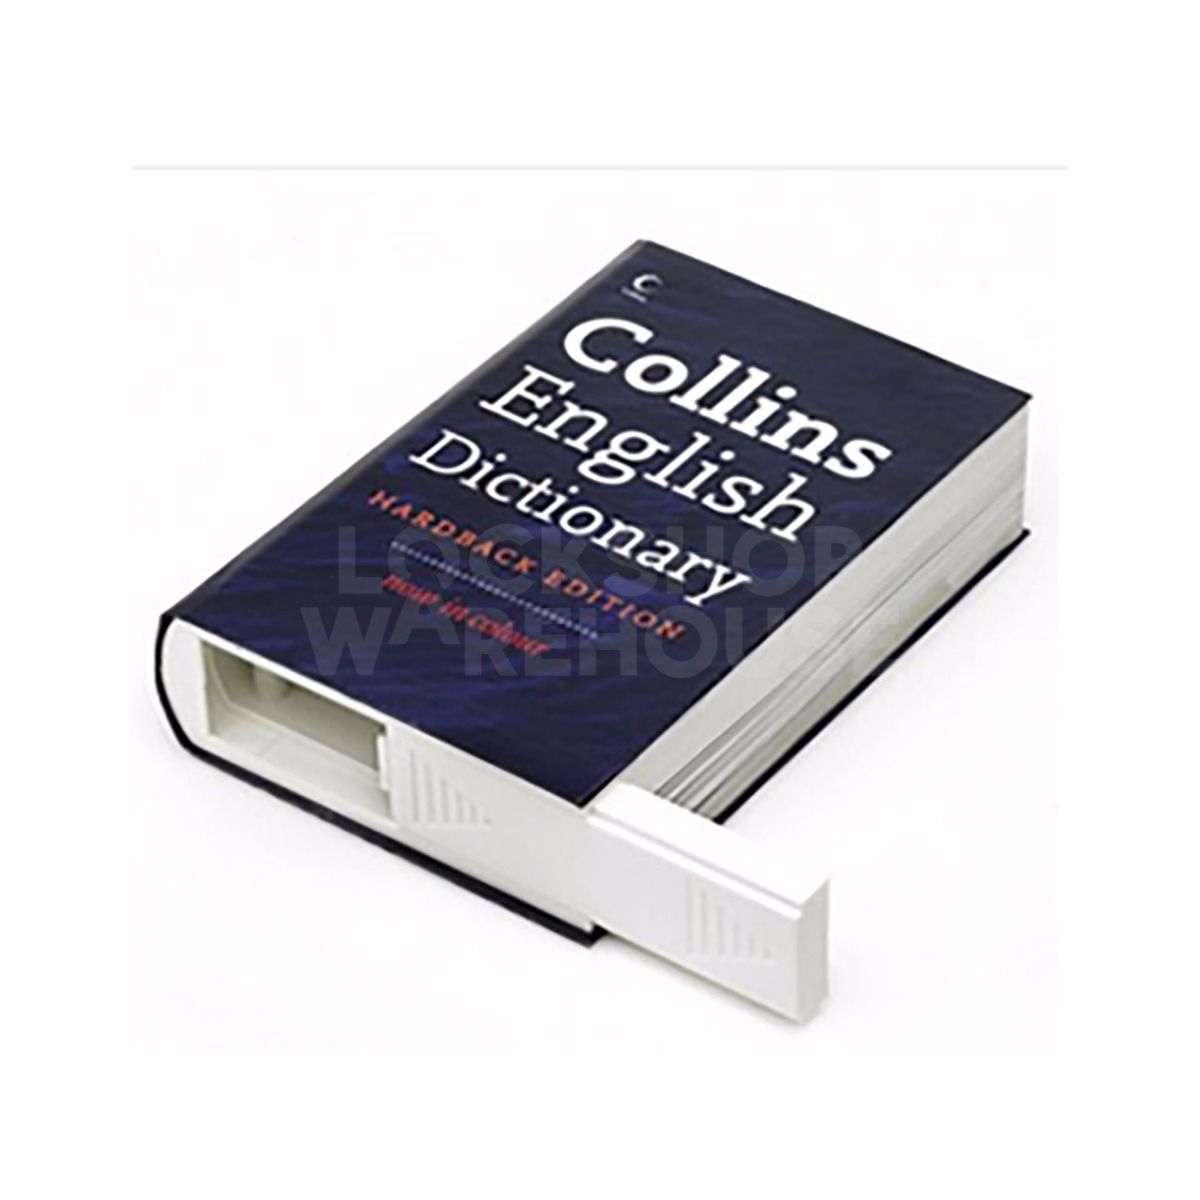 Safe Book - Oxford Dictionary